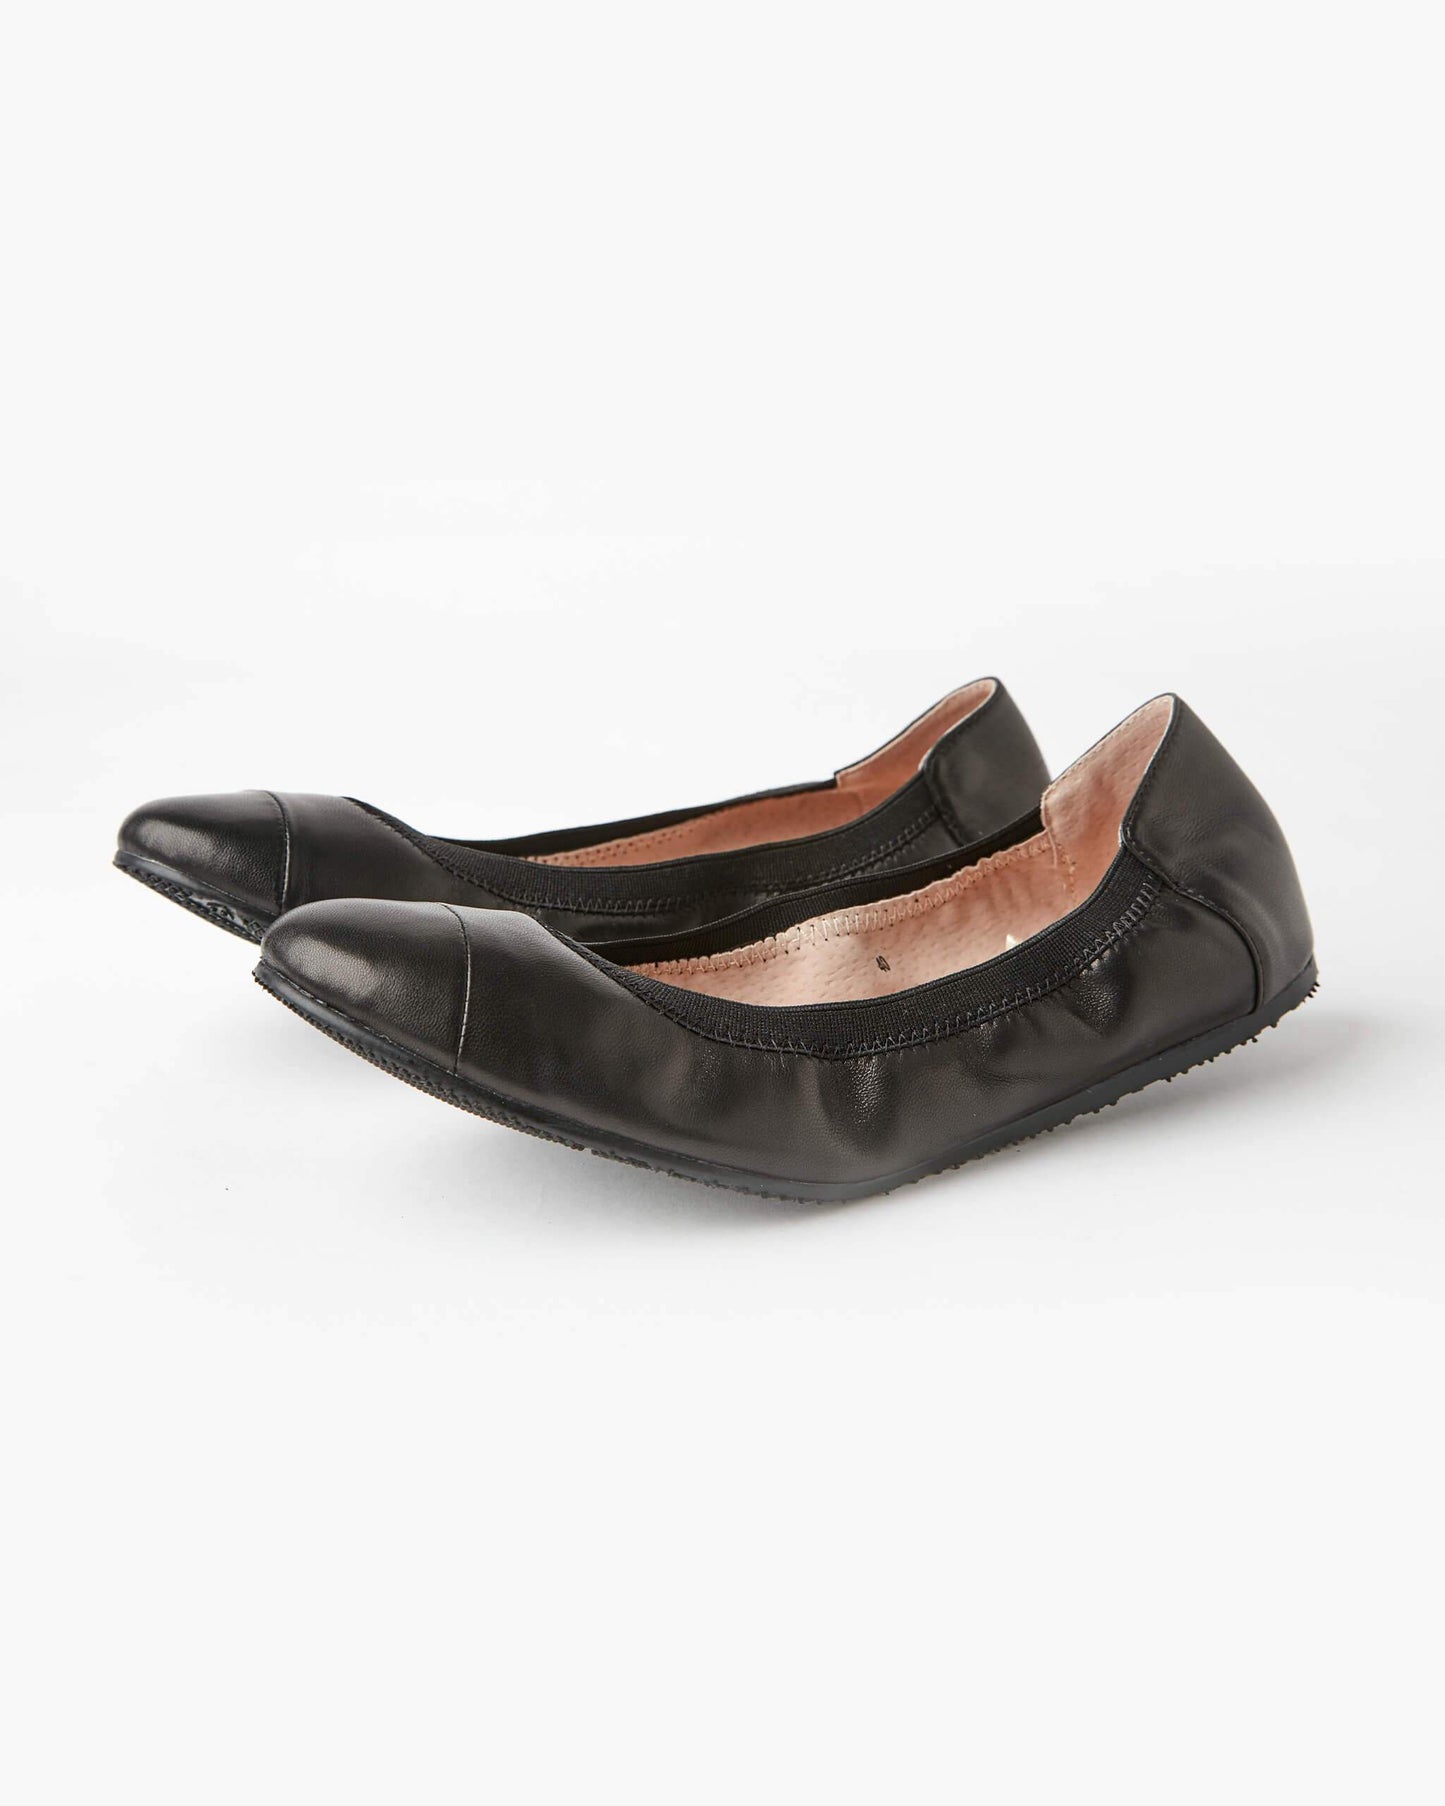 AVA BALLET FLAT  BLACK - WALNUT MELBOURNE - 36, 37, 38, 39, 40, 41, 42, 43, BALLET FLAT, BLACK, WALNUT, womens footwear, womens shoes - Stomp Shoes Darwin